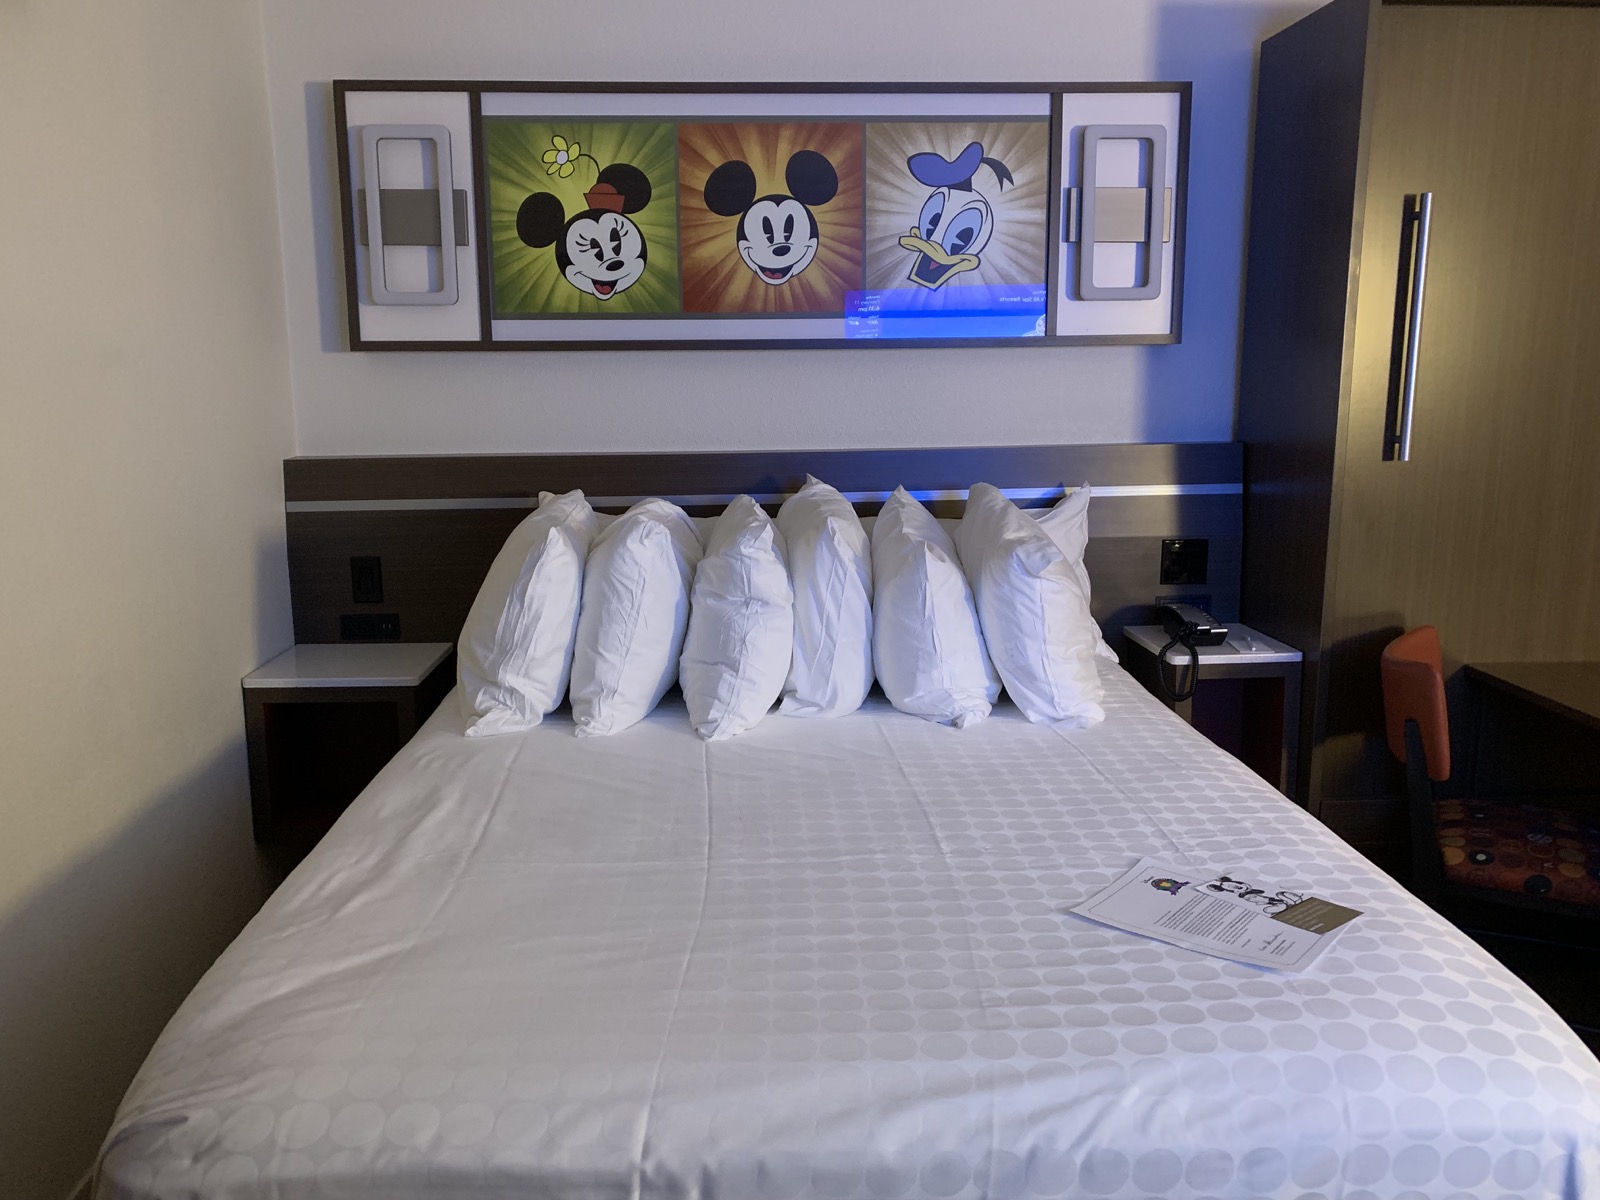 Disneys-asm-remodeled-room5